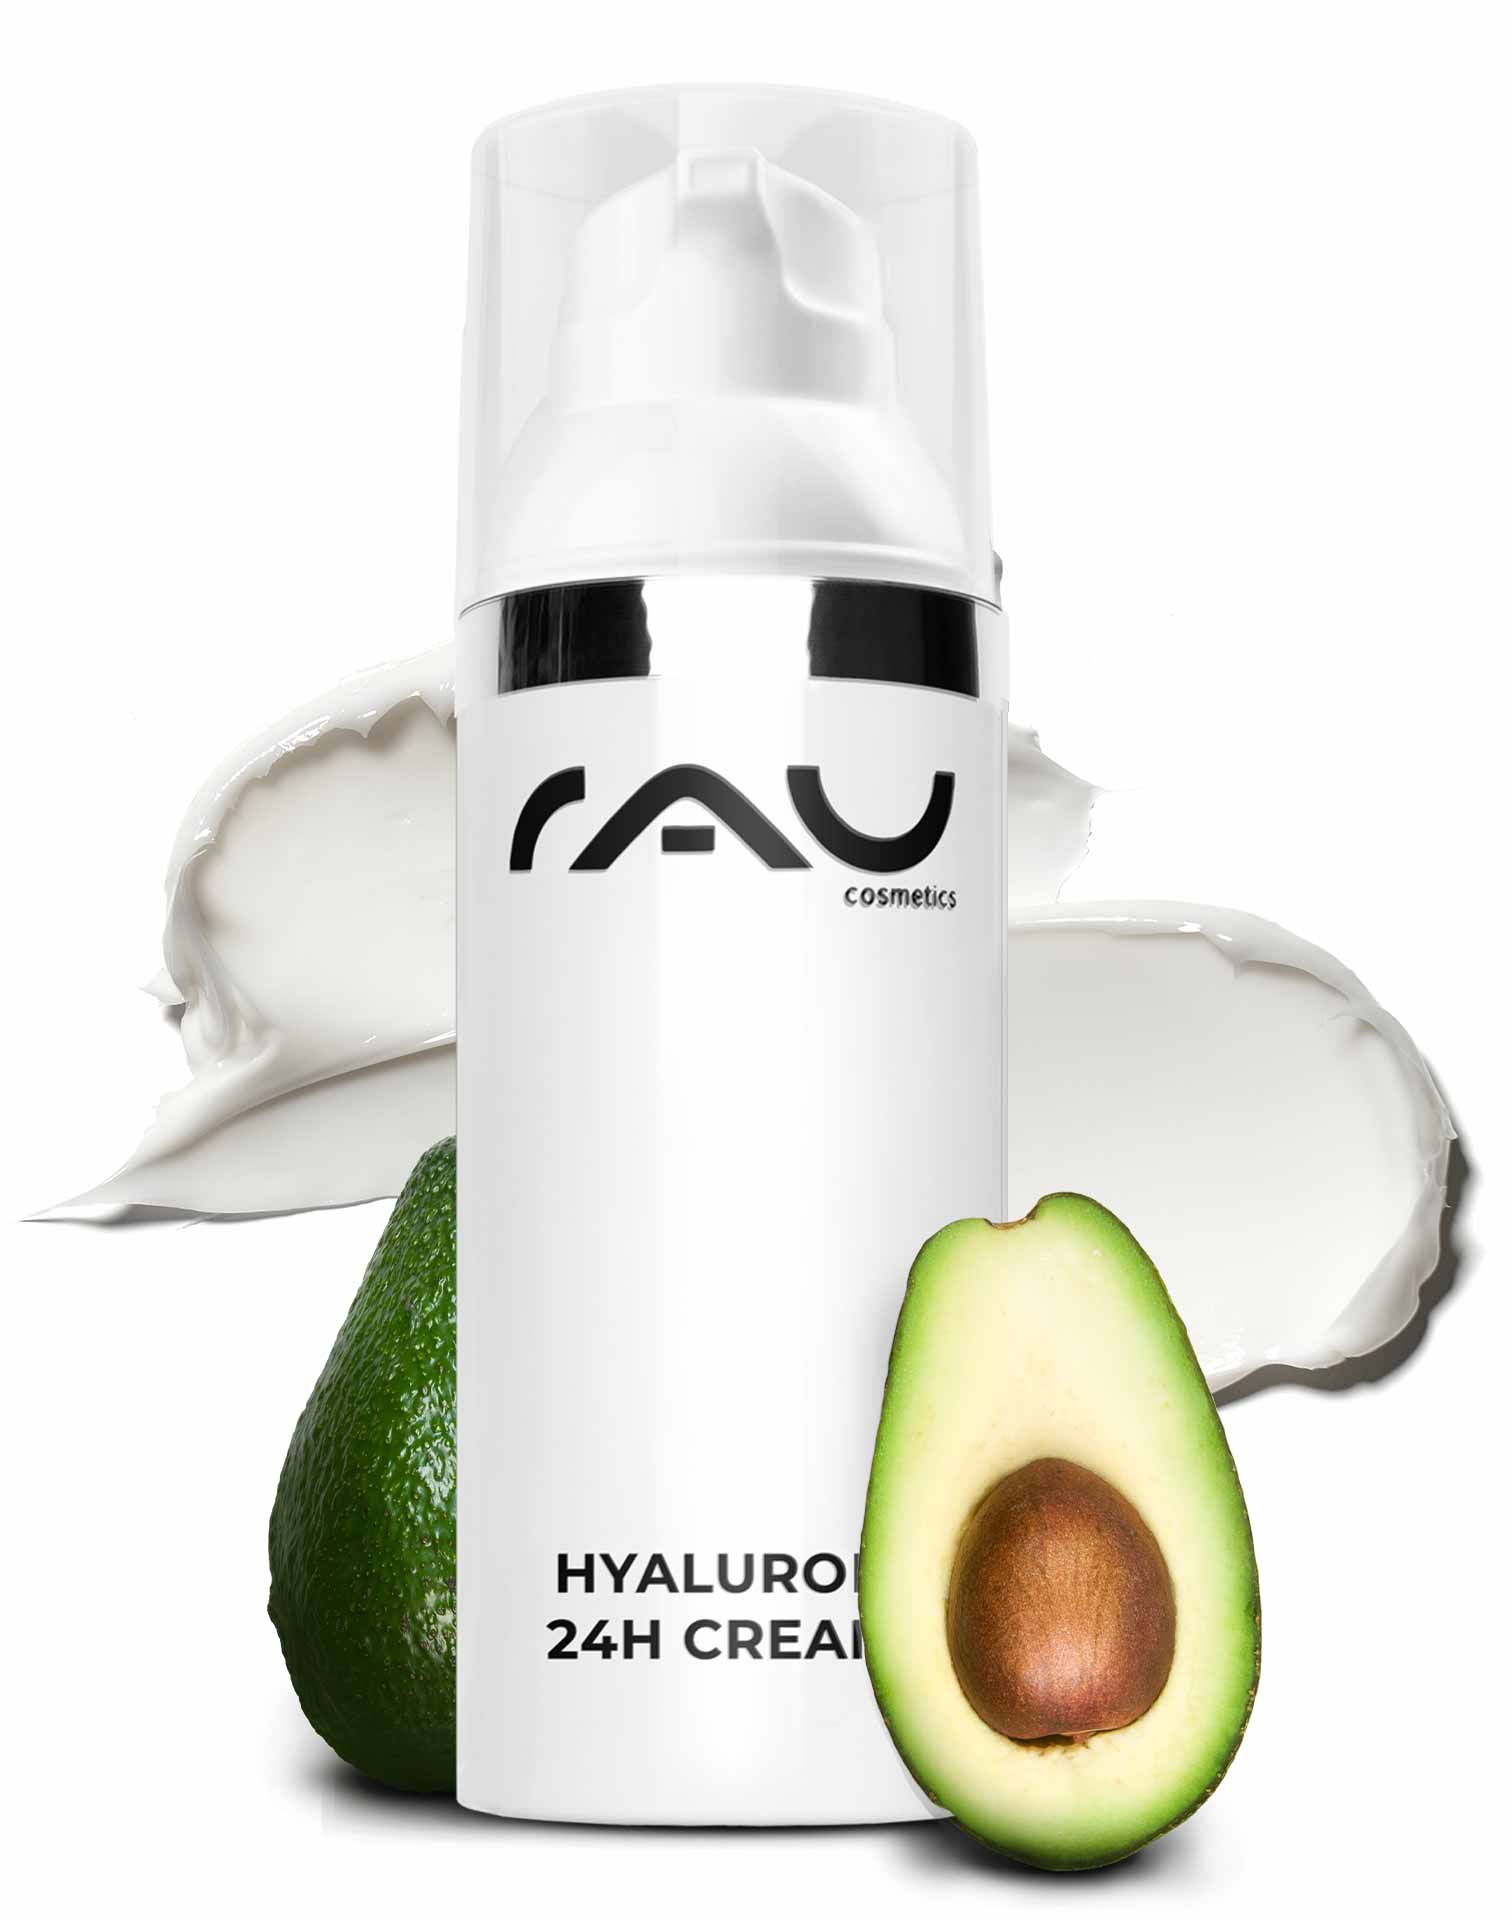 RAU Hyaluron 24h Cream 50 ml - Hyaluronic Acid Cream with Shea Butter & Avocado Oil